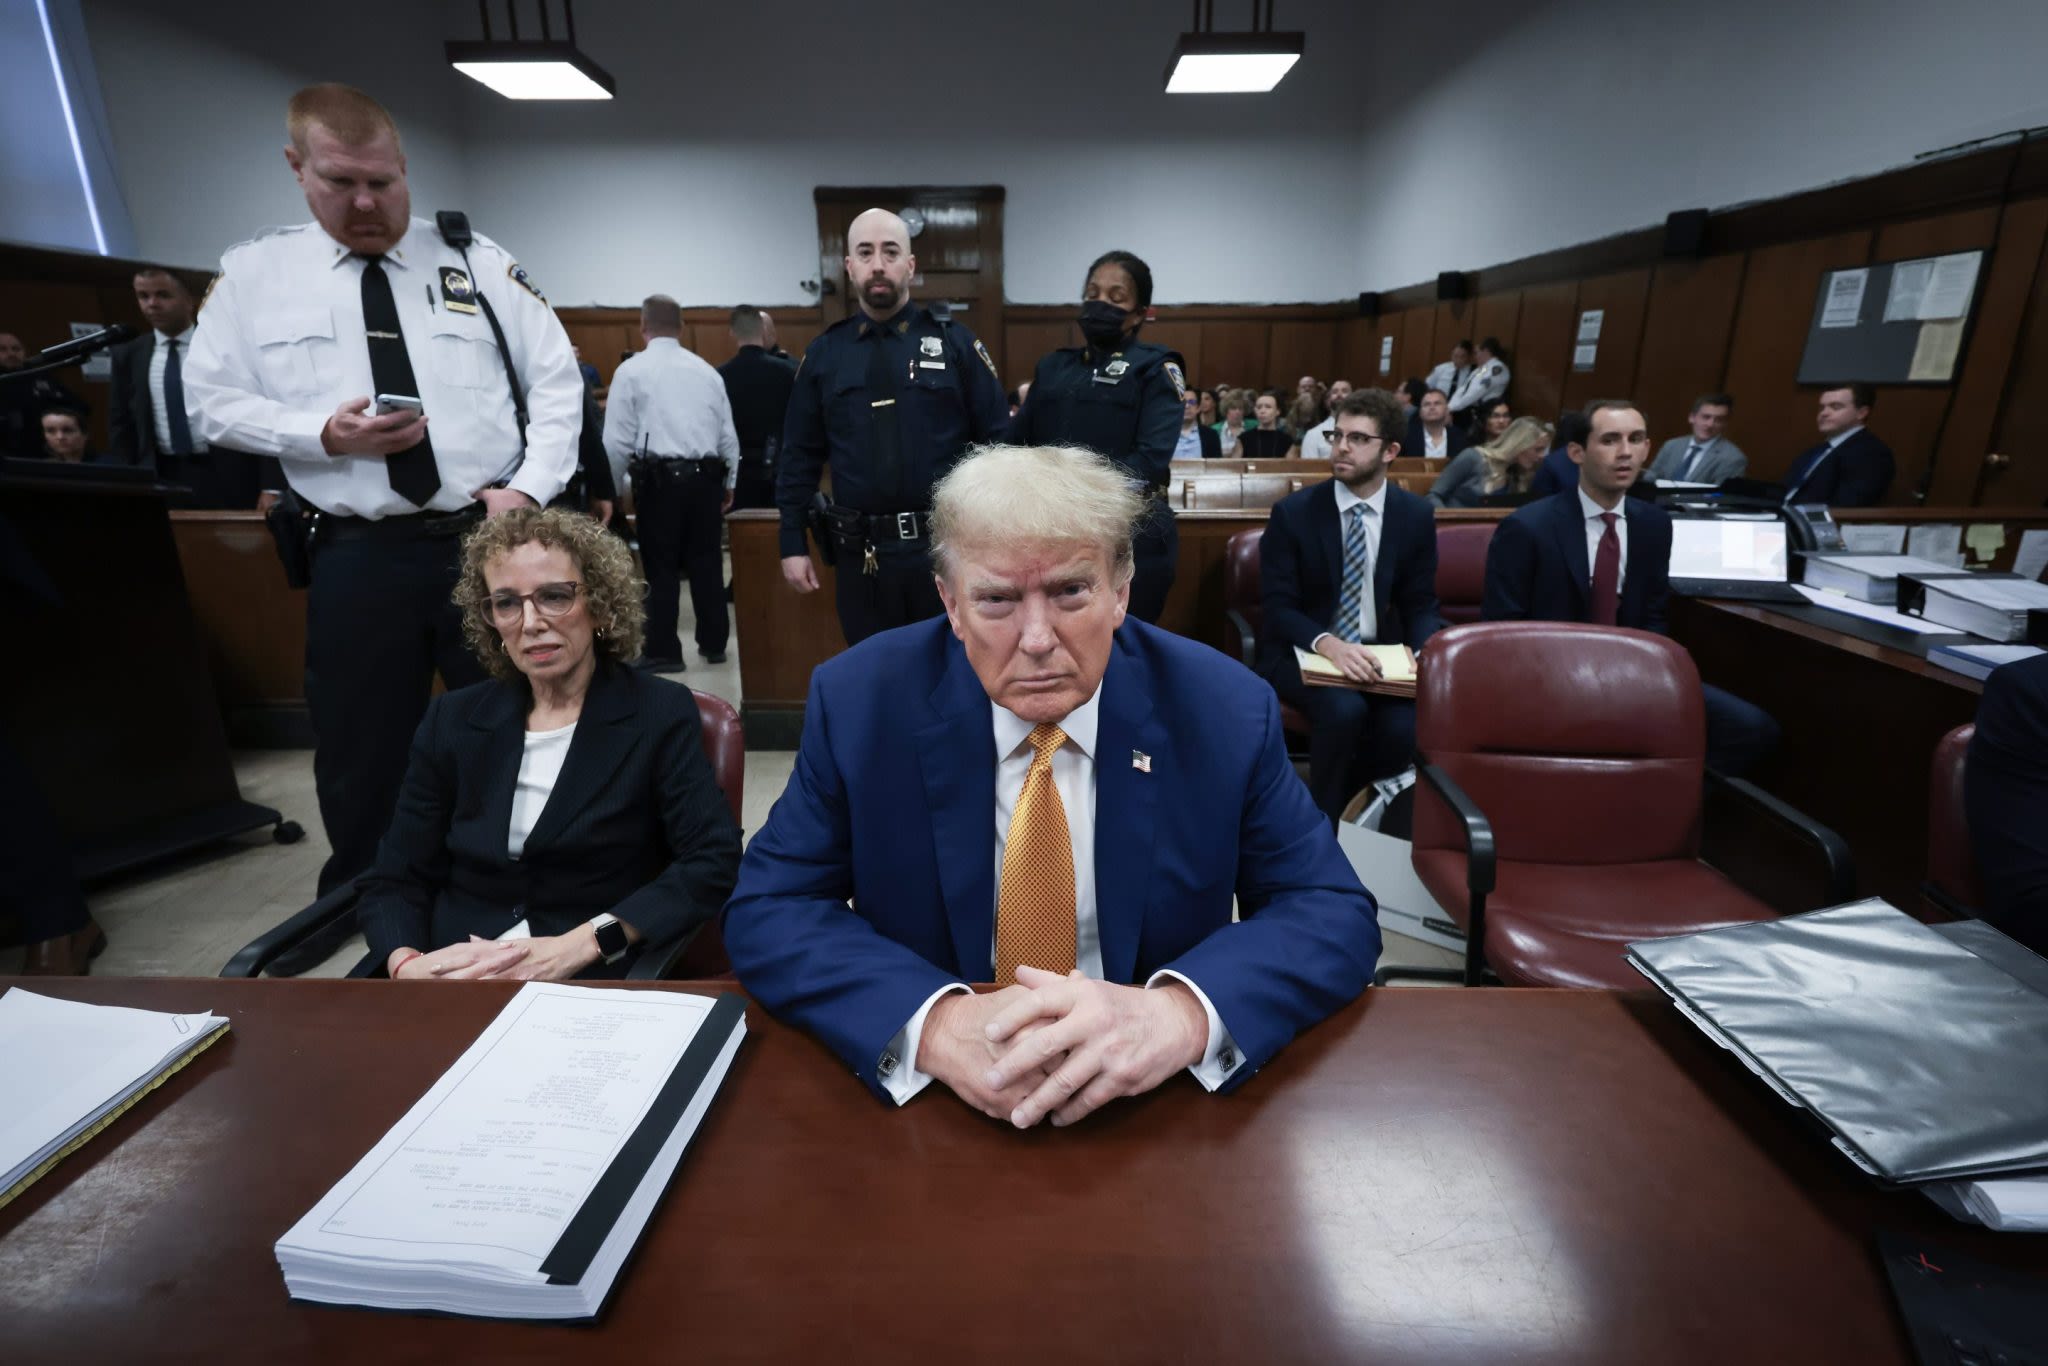 Facing jail threats, Trump posts and deletes criticism of judge and prosecutors on Truth Social